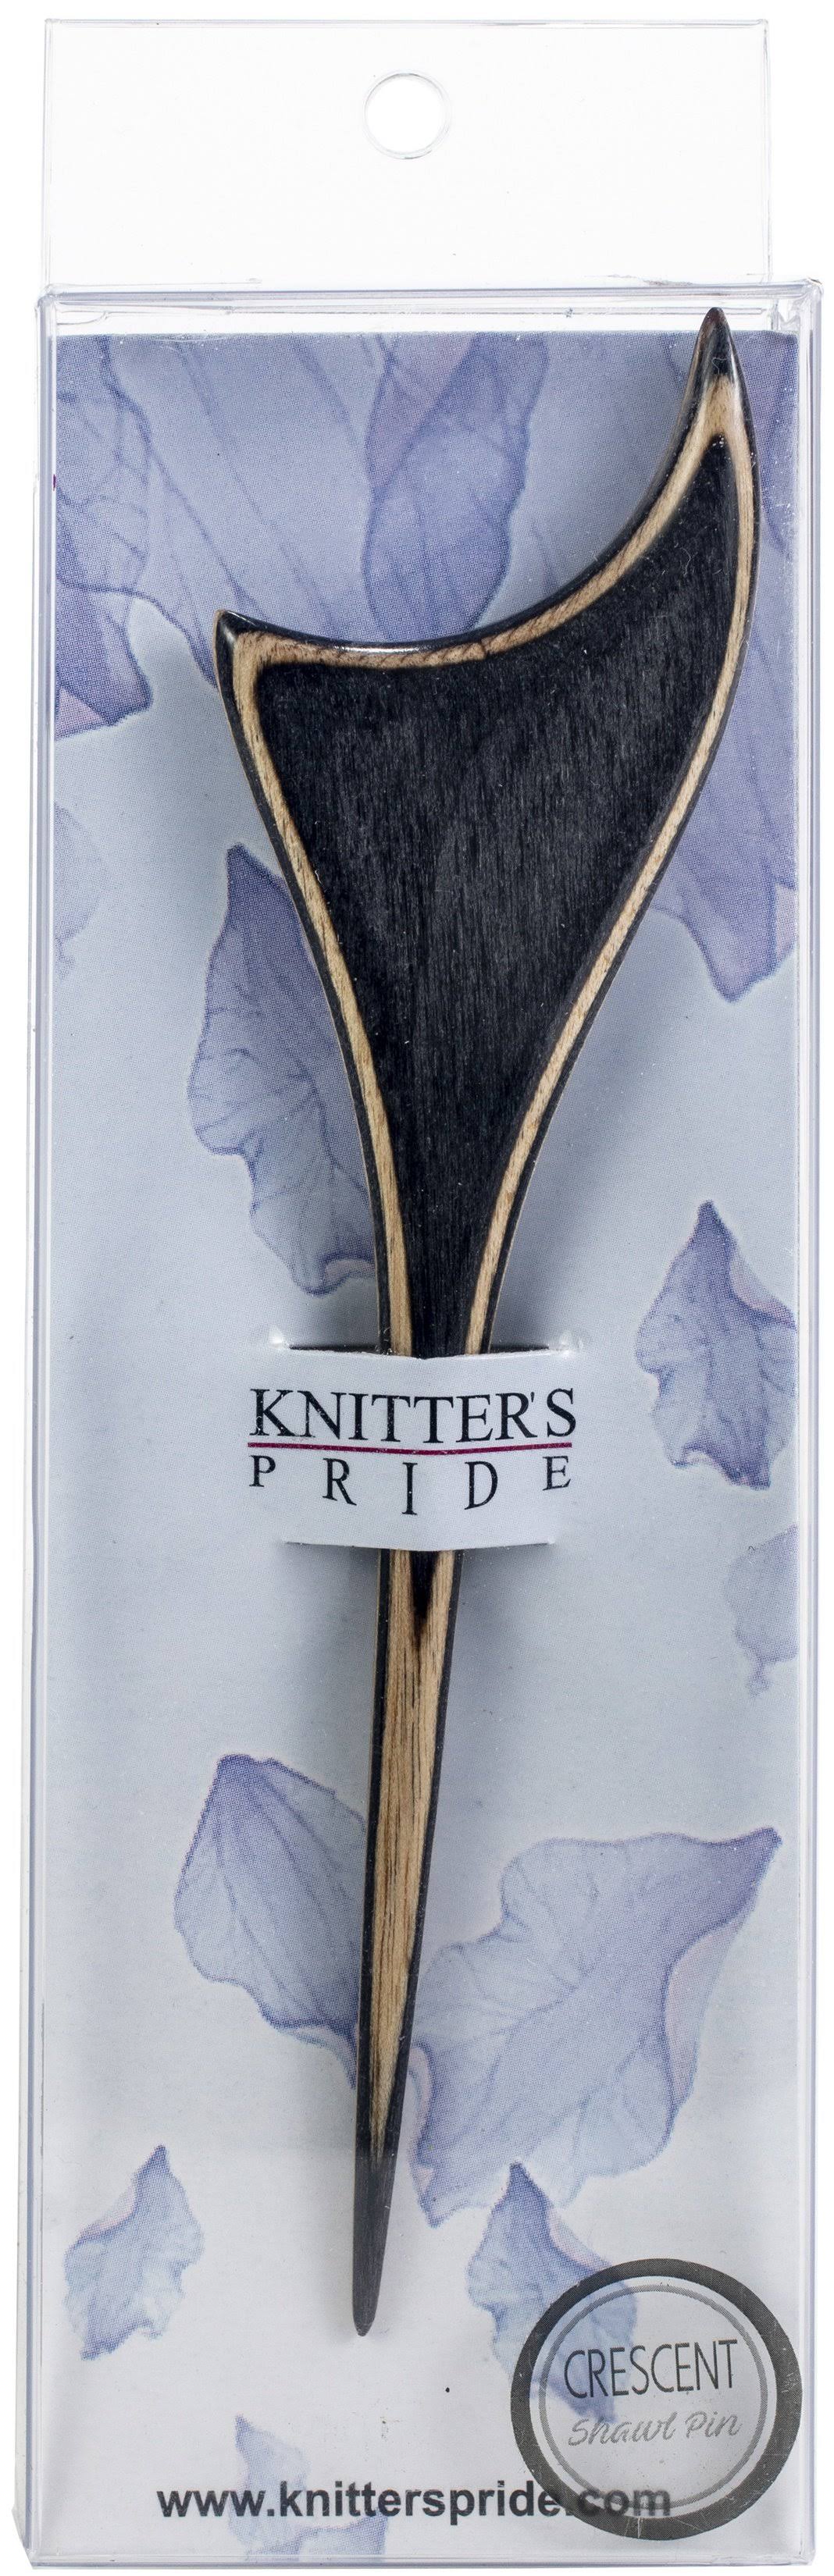 Knitter's Pride Flora Shawl Stick Crescent Black & Brown